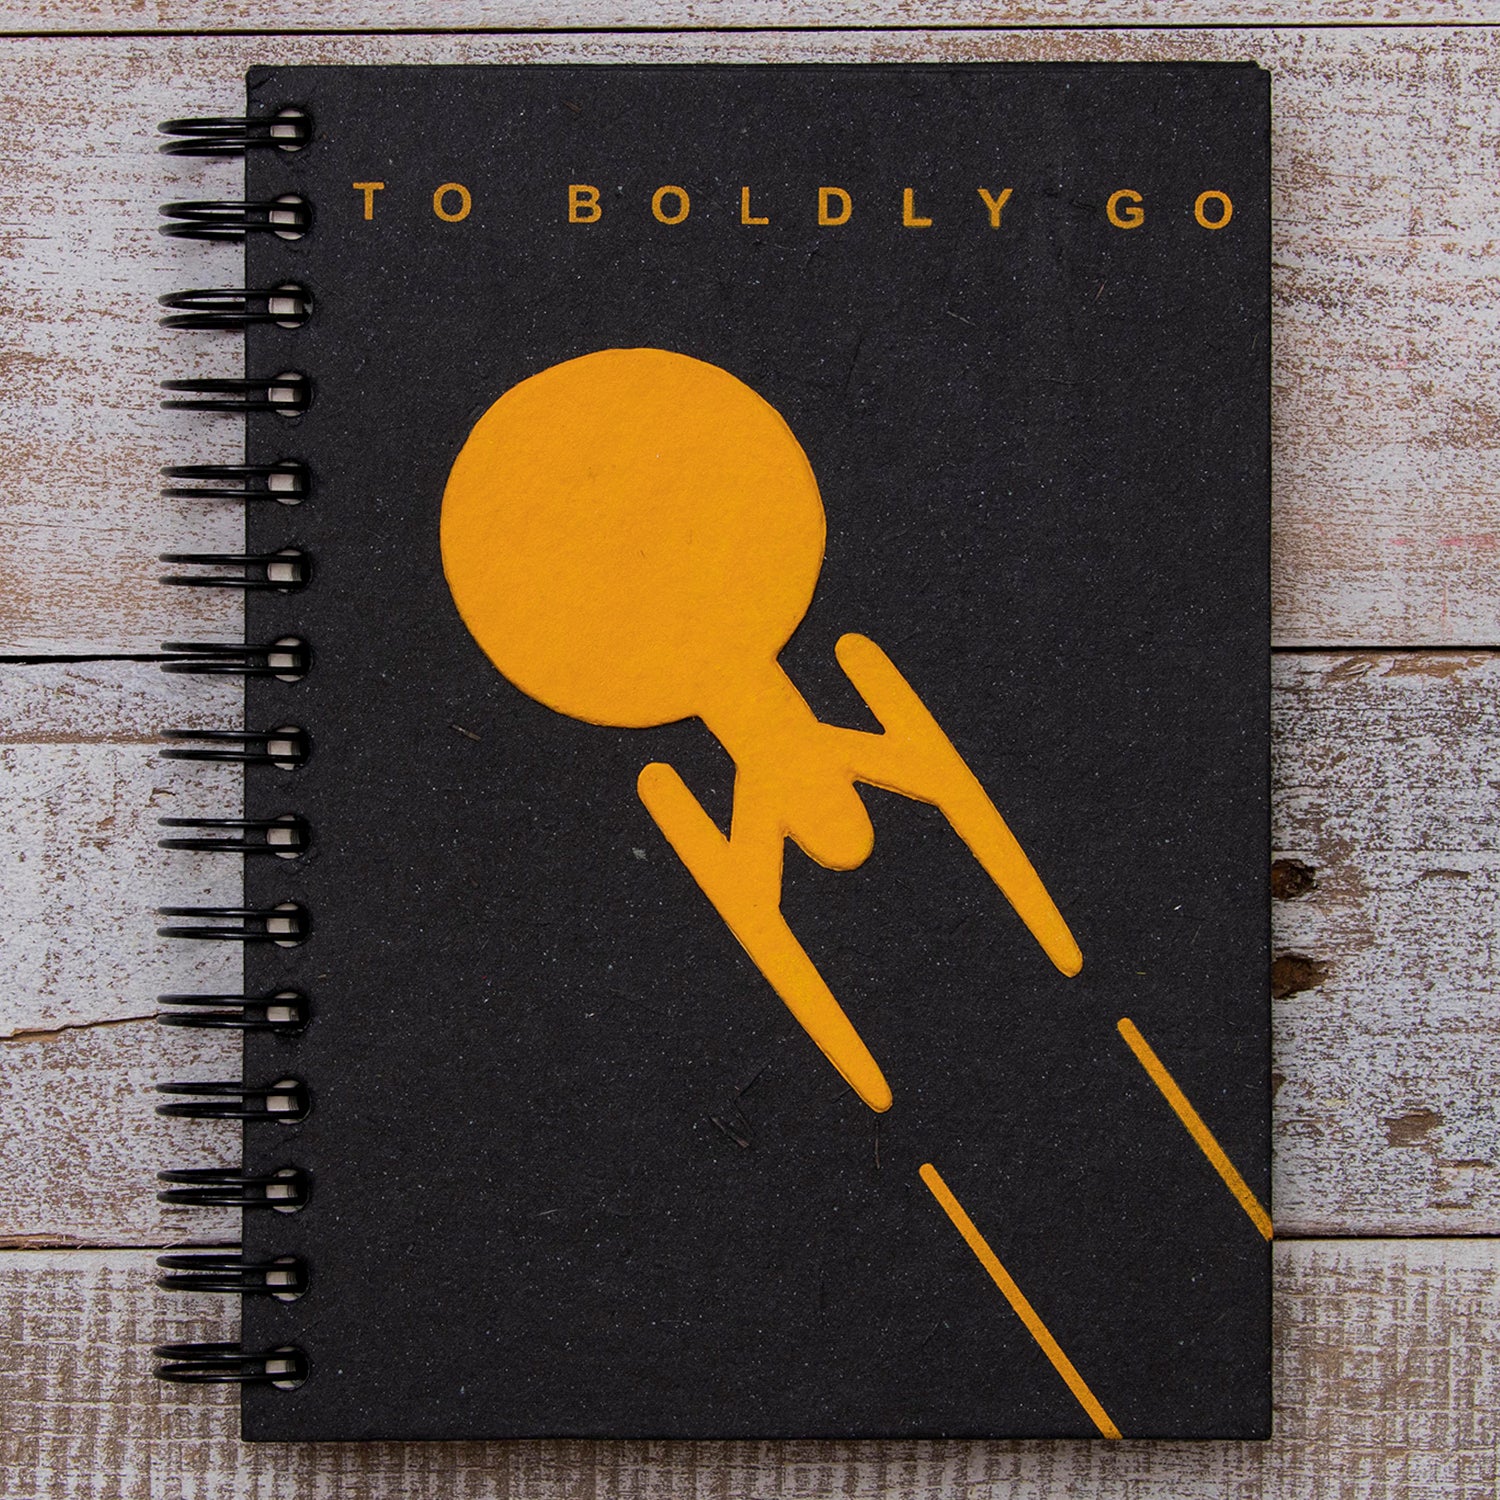 Mr. Ellie Pooh • Handmade Fair Trade Gifts • Small Notebook Brooklyn Bridge  Sketch